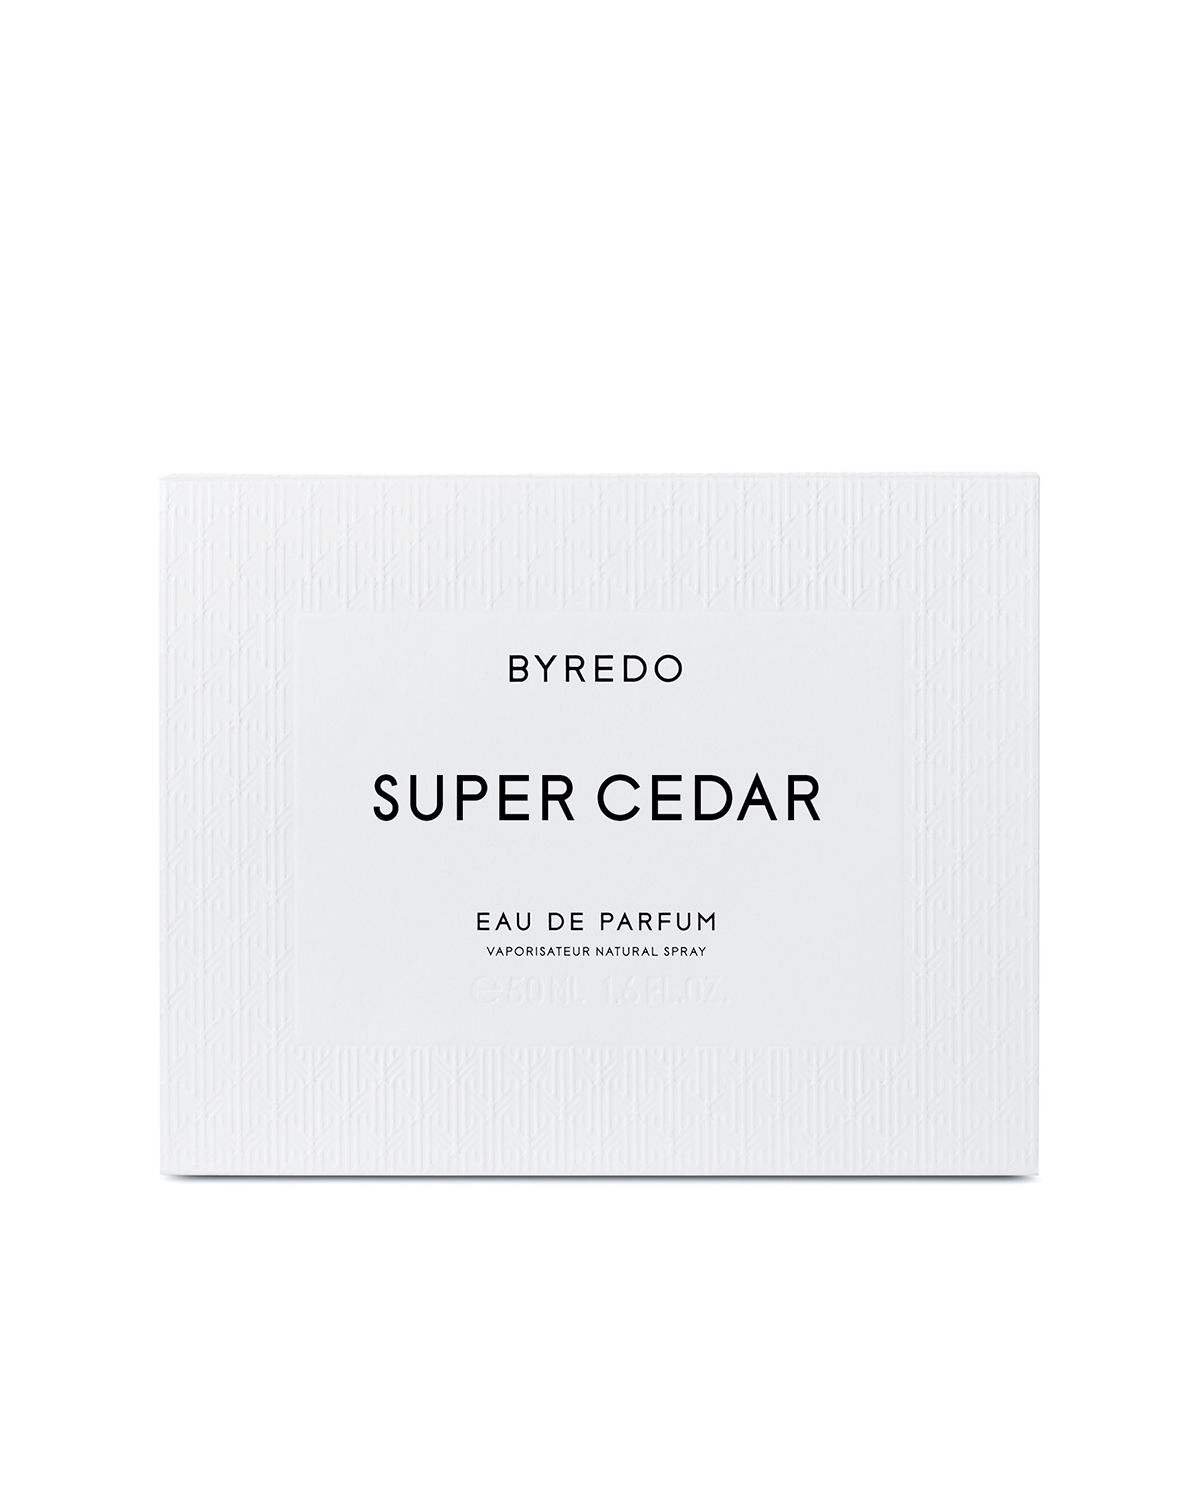 Super Cedar 50ml Eau de Parfum